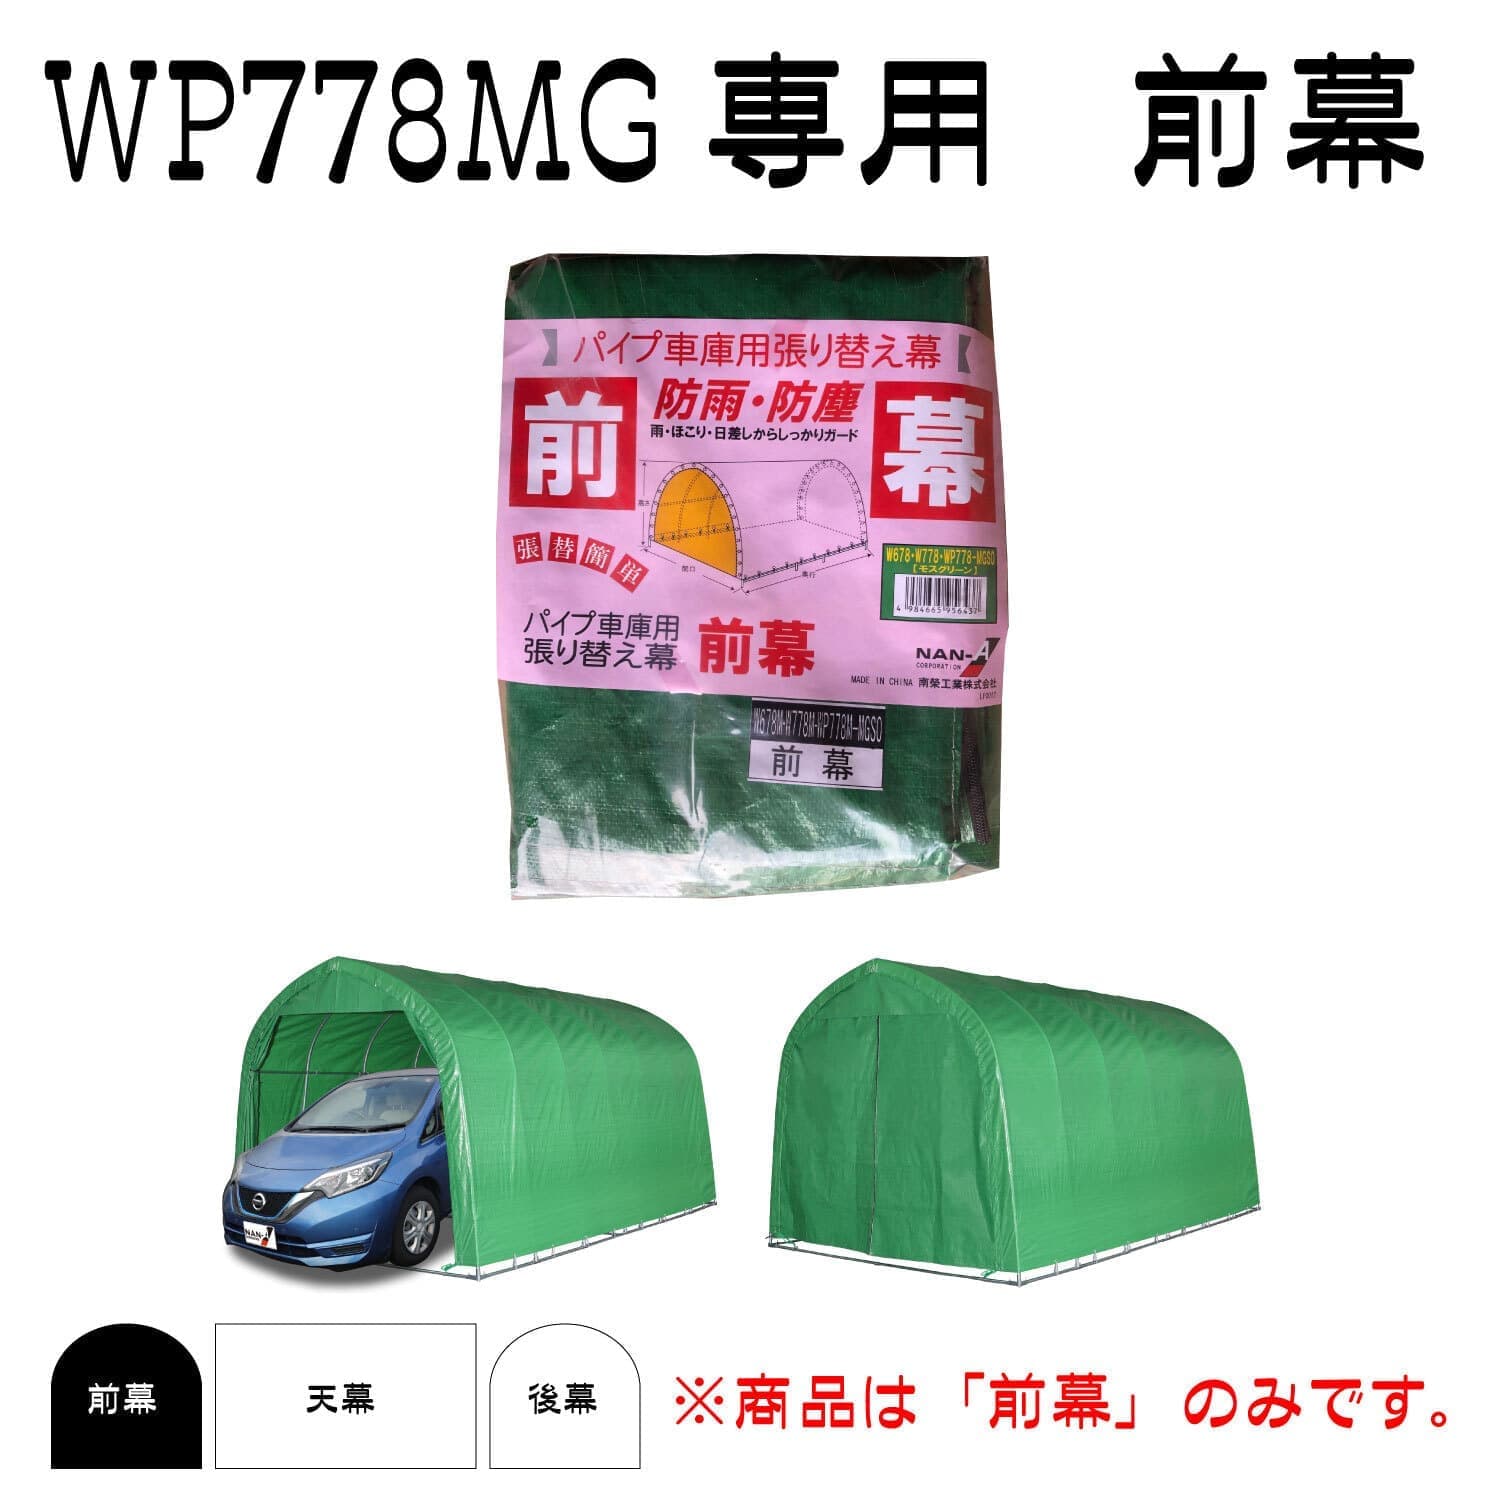 WP778 MG, SVU｜パイプ車庫｜南榮工業株式会社